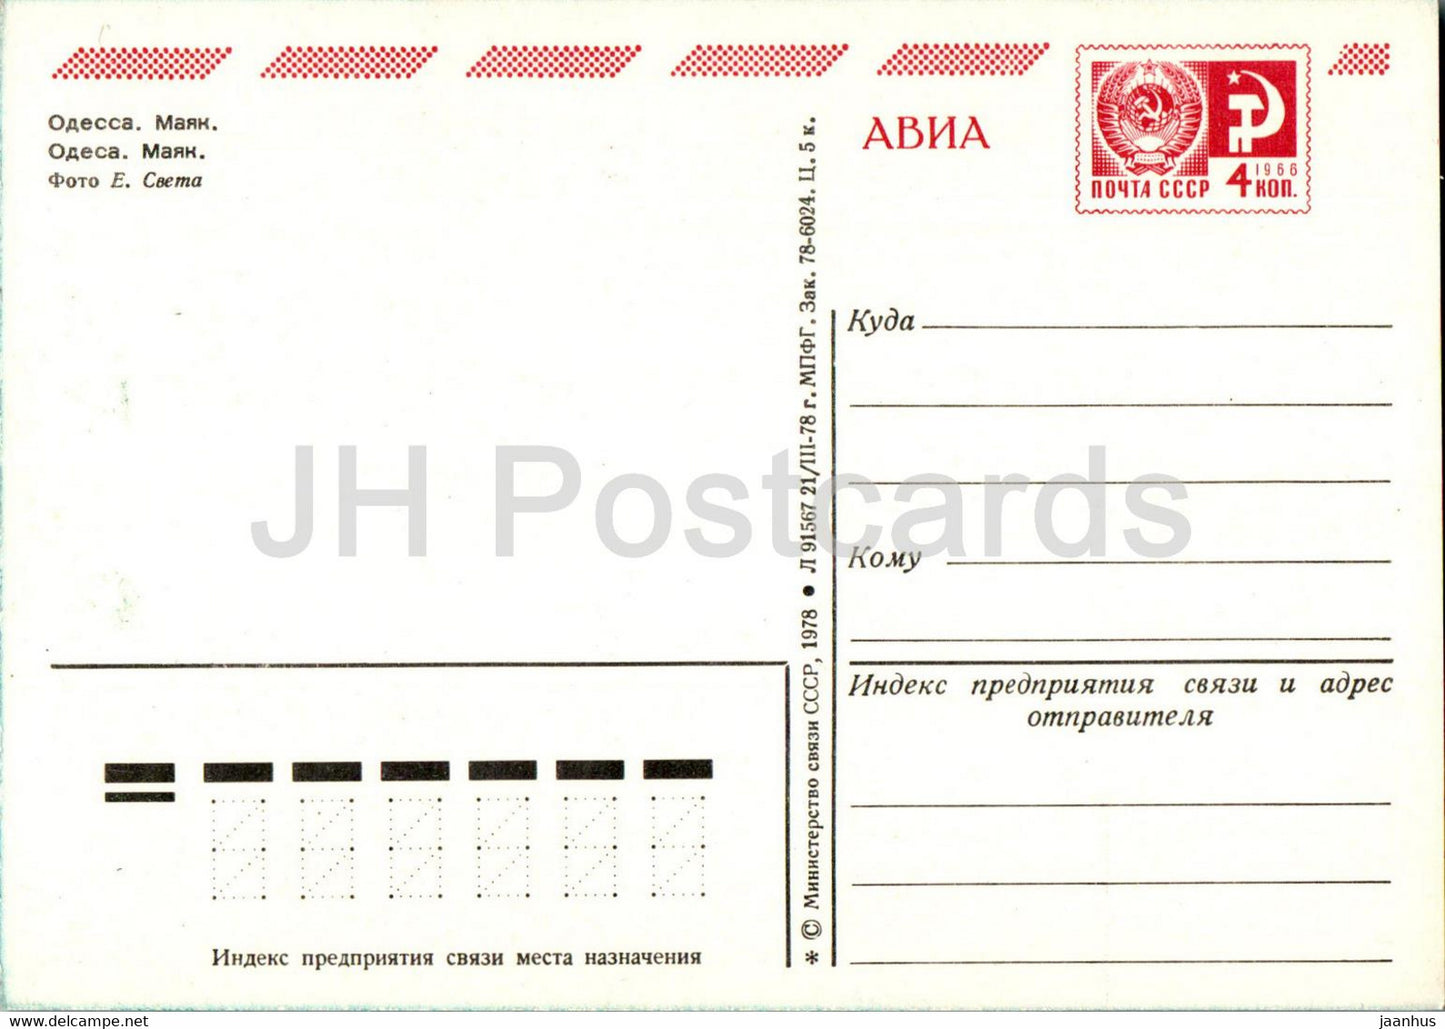 Odessa - Phare - entier postal - 1978 - Ukraine URSS - inutilisé